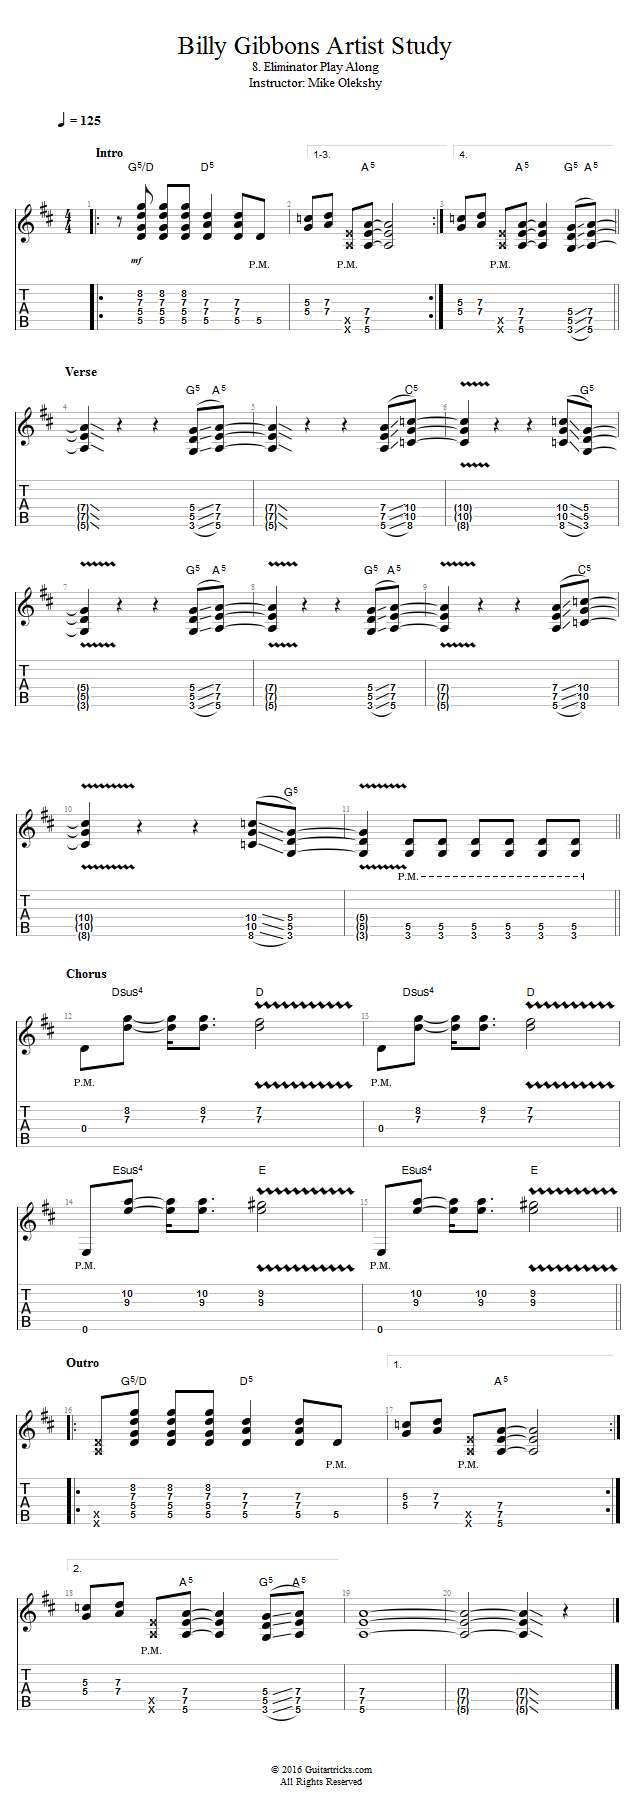 Eliminator Play Along song notation